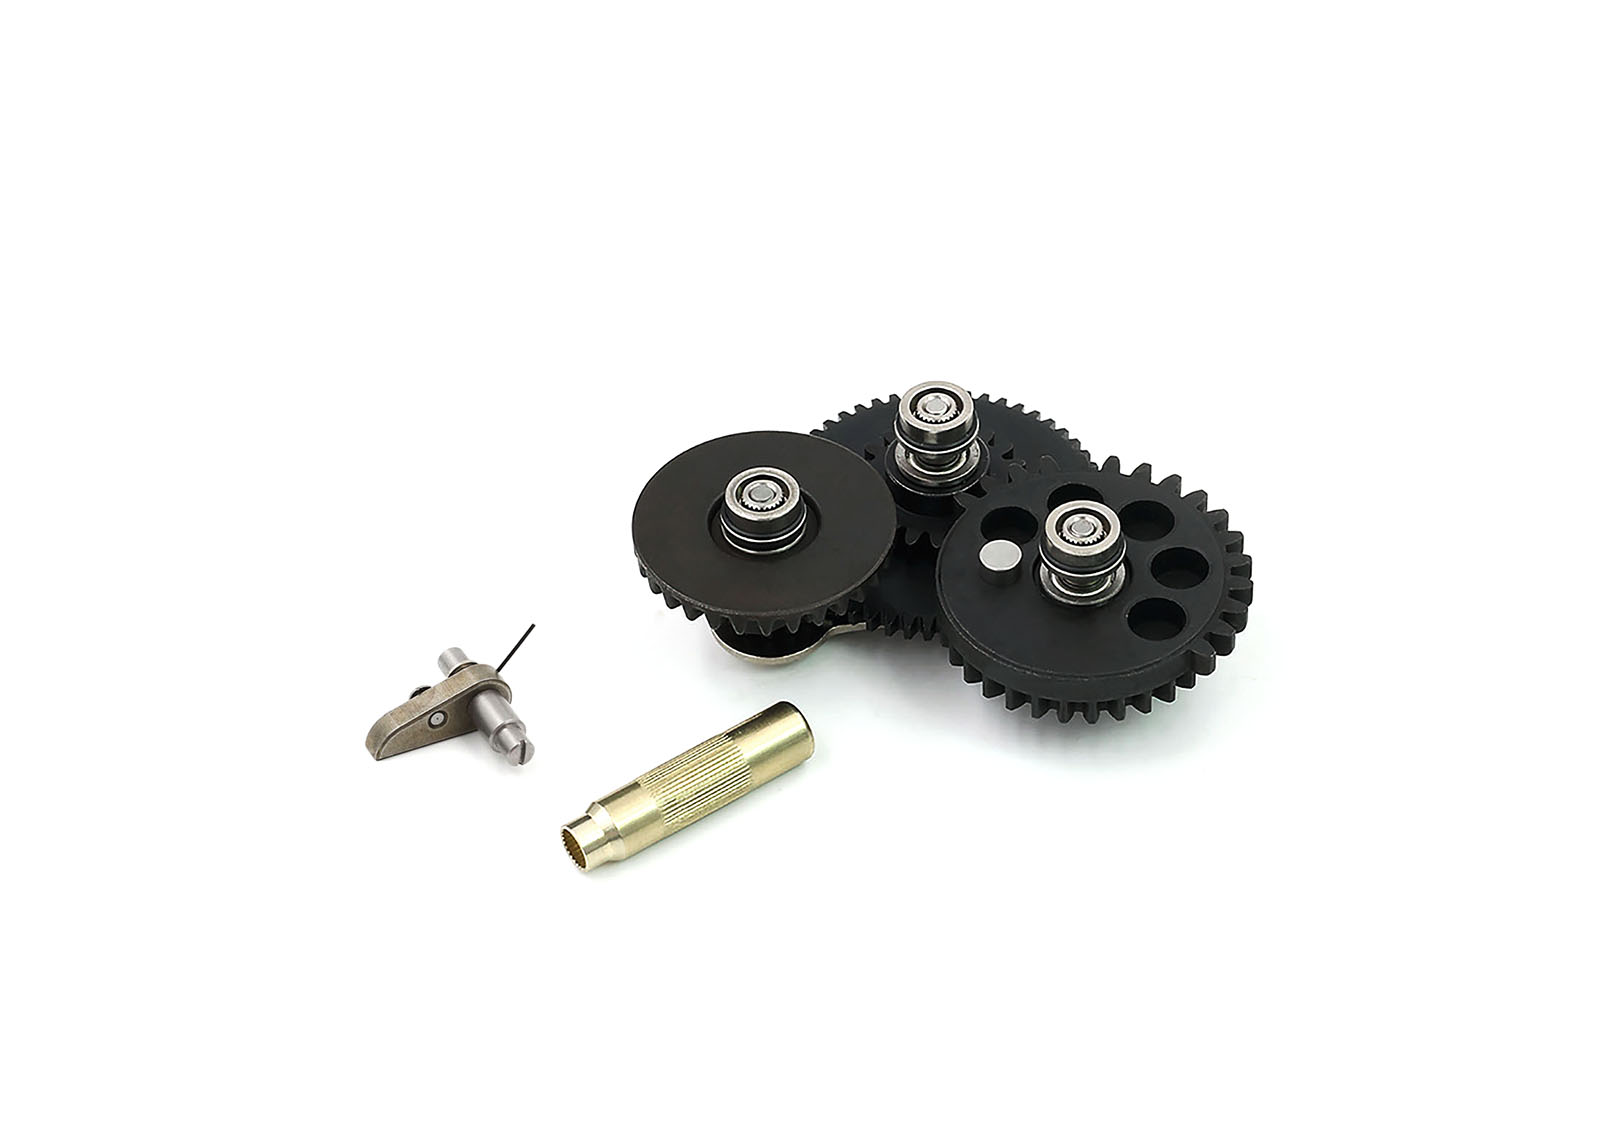 Modular Gear Set - SMOOTH 7mm Ver.2/Ver.3 (NanoTorque 22.2:1+Gear Key) - Modify Airsoft parts